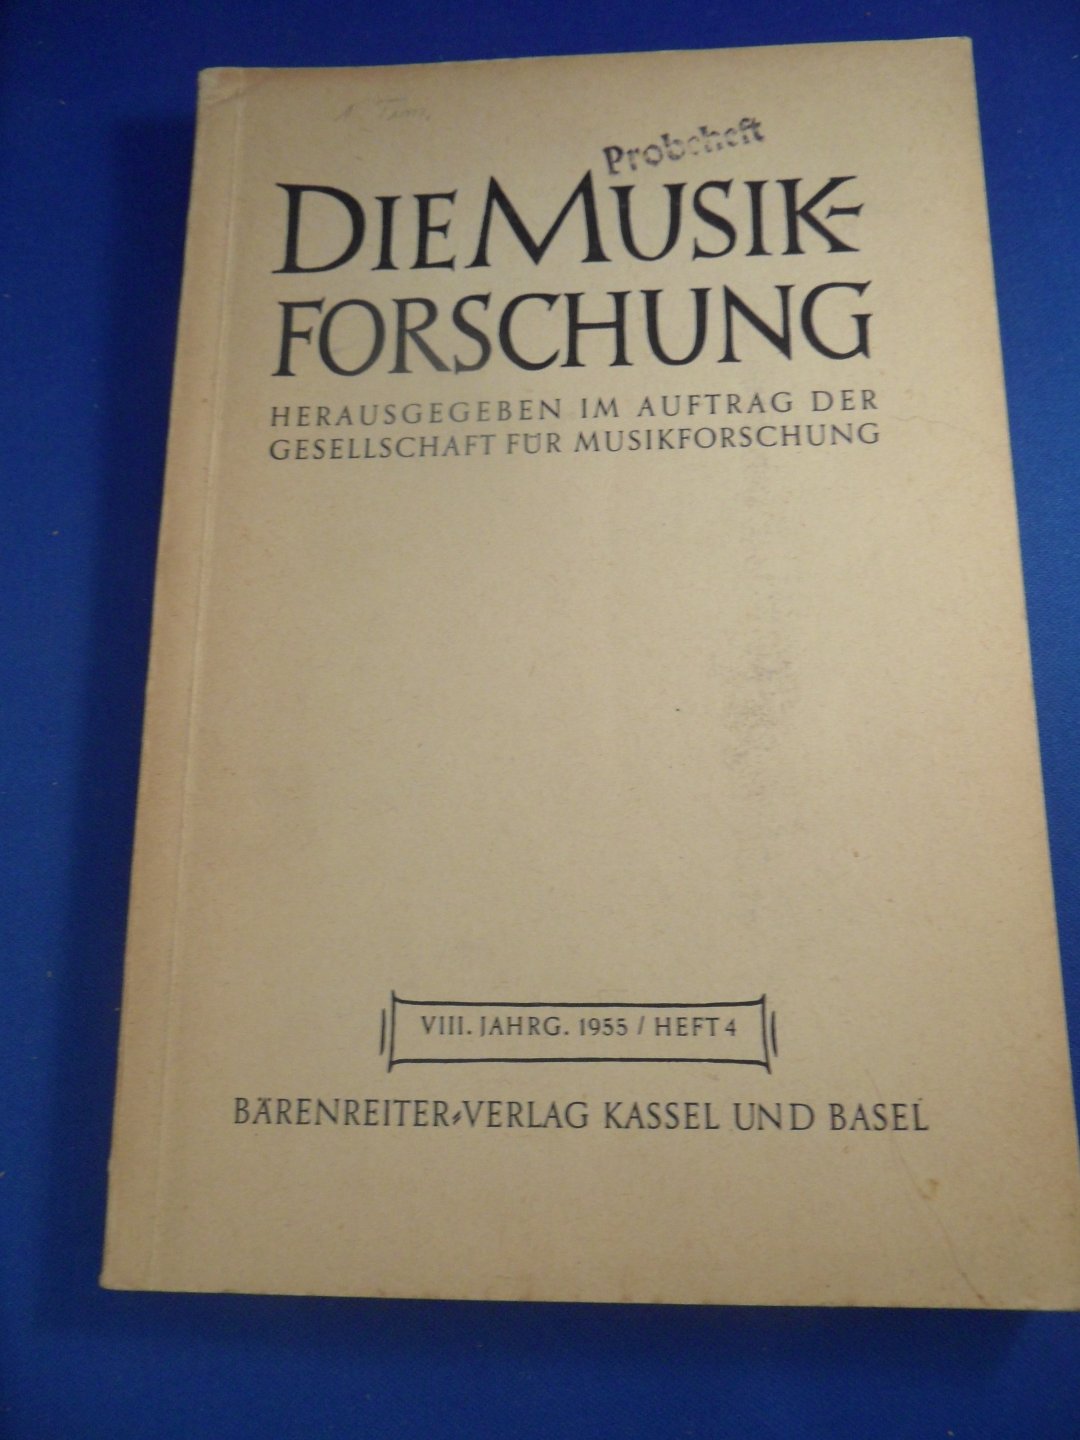  - Die Musikforschung. Herausgegeben von der Gesellschaft für Musikforschung. Jaargang VIII, heft 4 1955